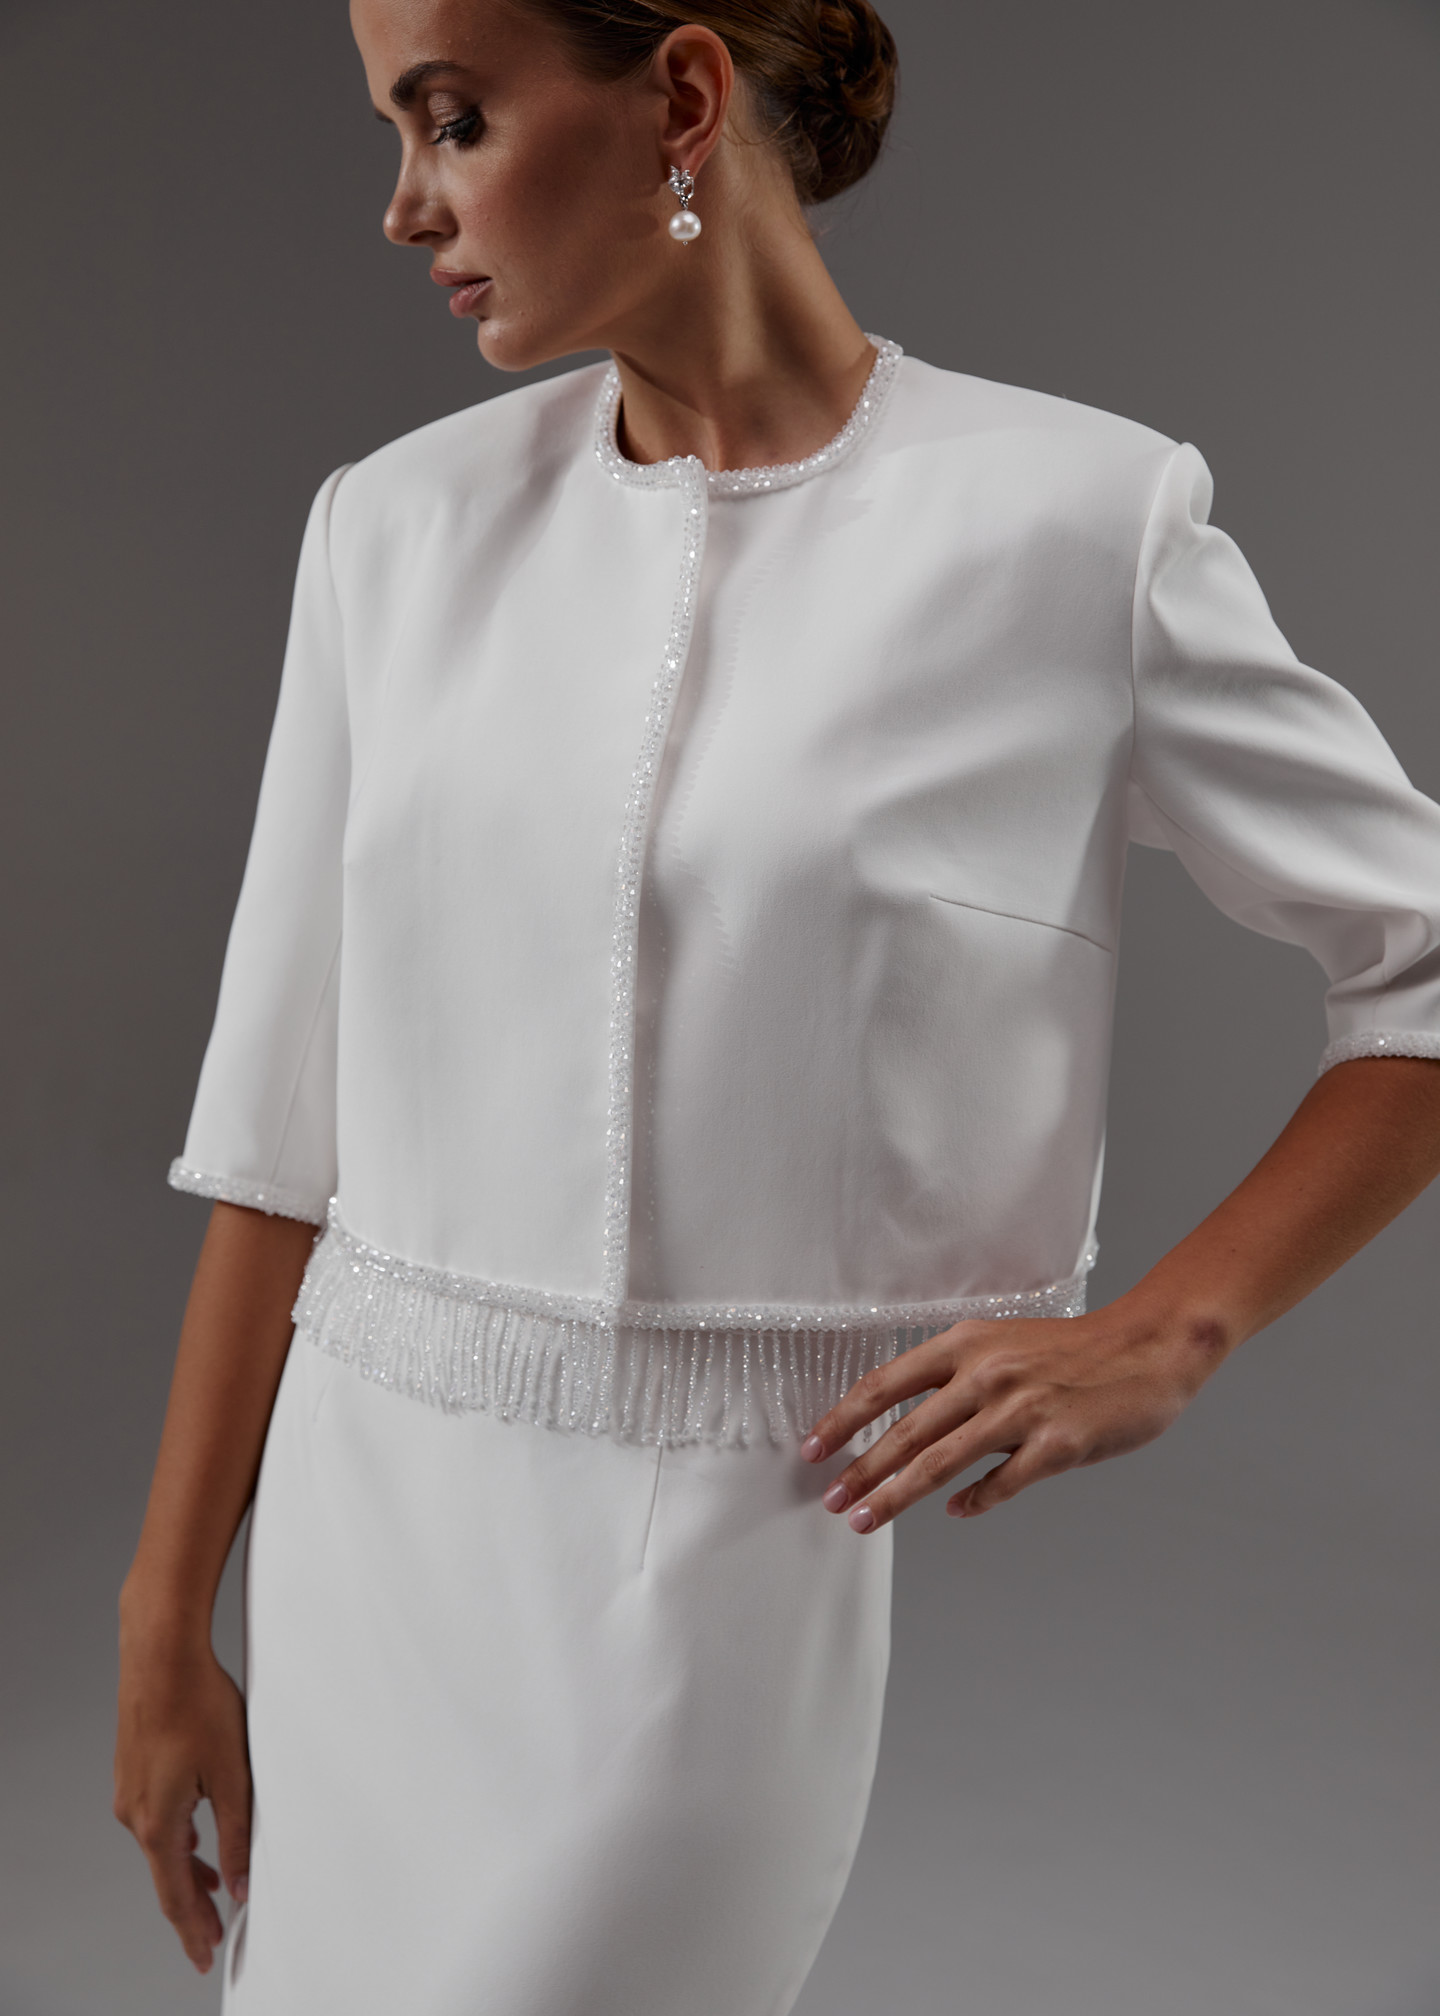 Fringed jacket, 2023, couture, jacket, bridal, off-white, fringed bridal suit, embroidery, sleeves